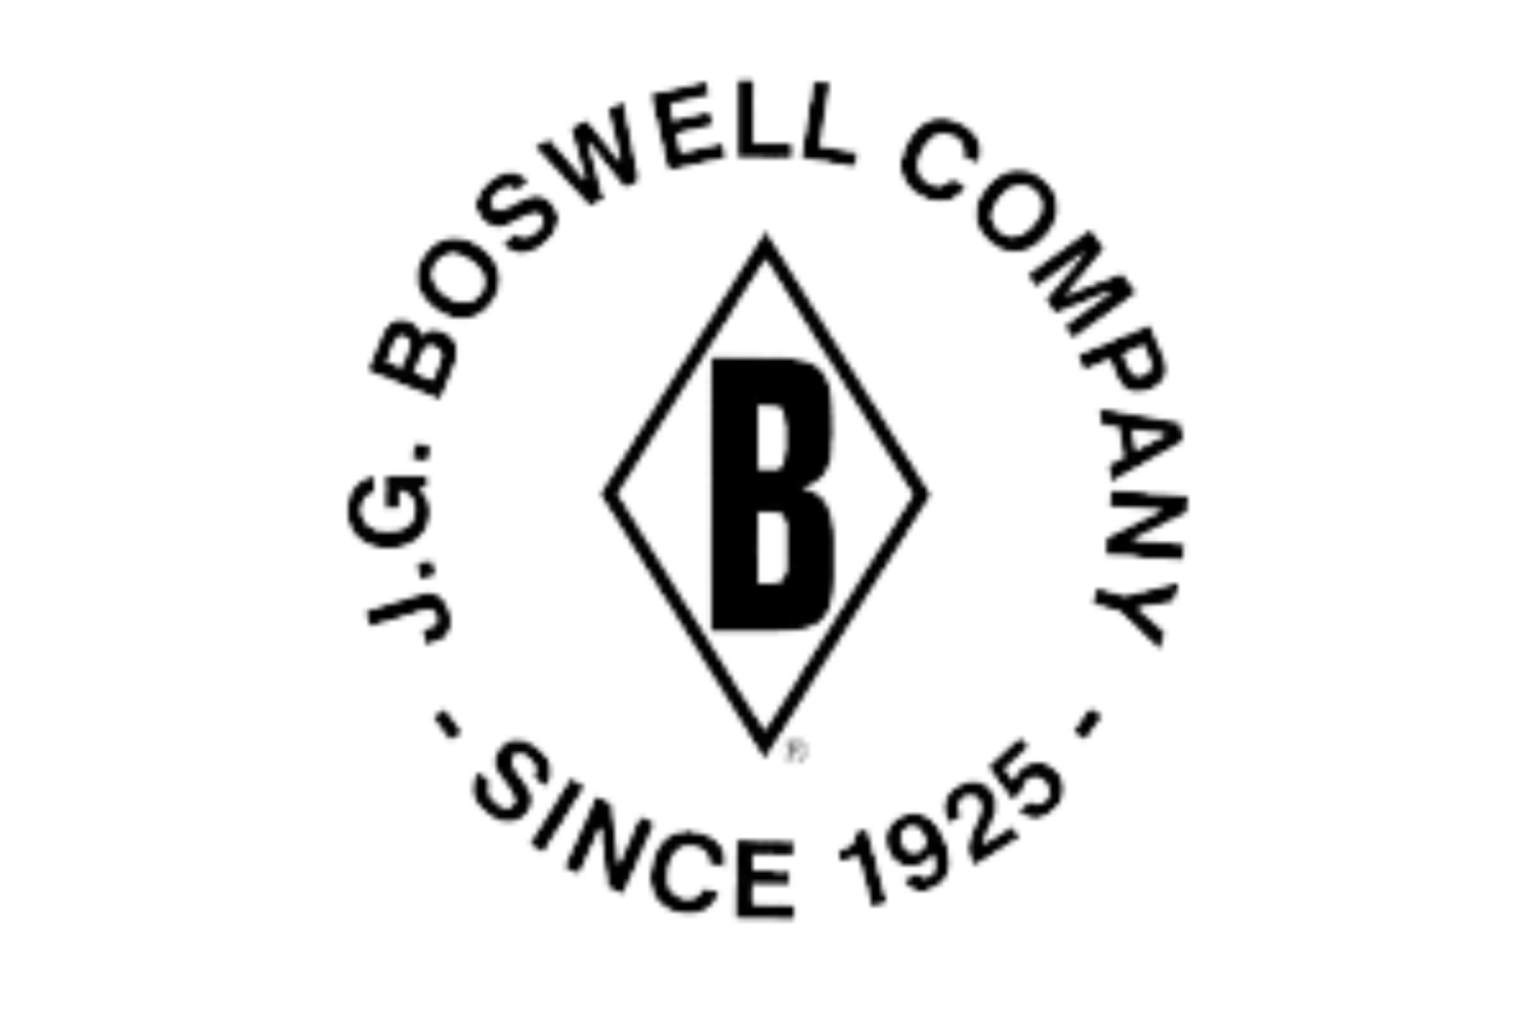 J.G. Boswell Company logo.